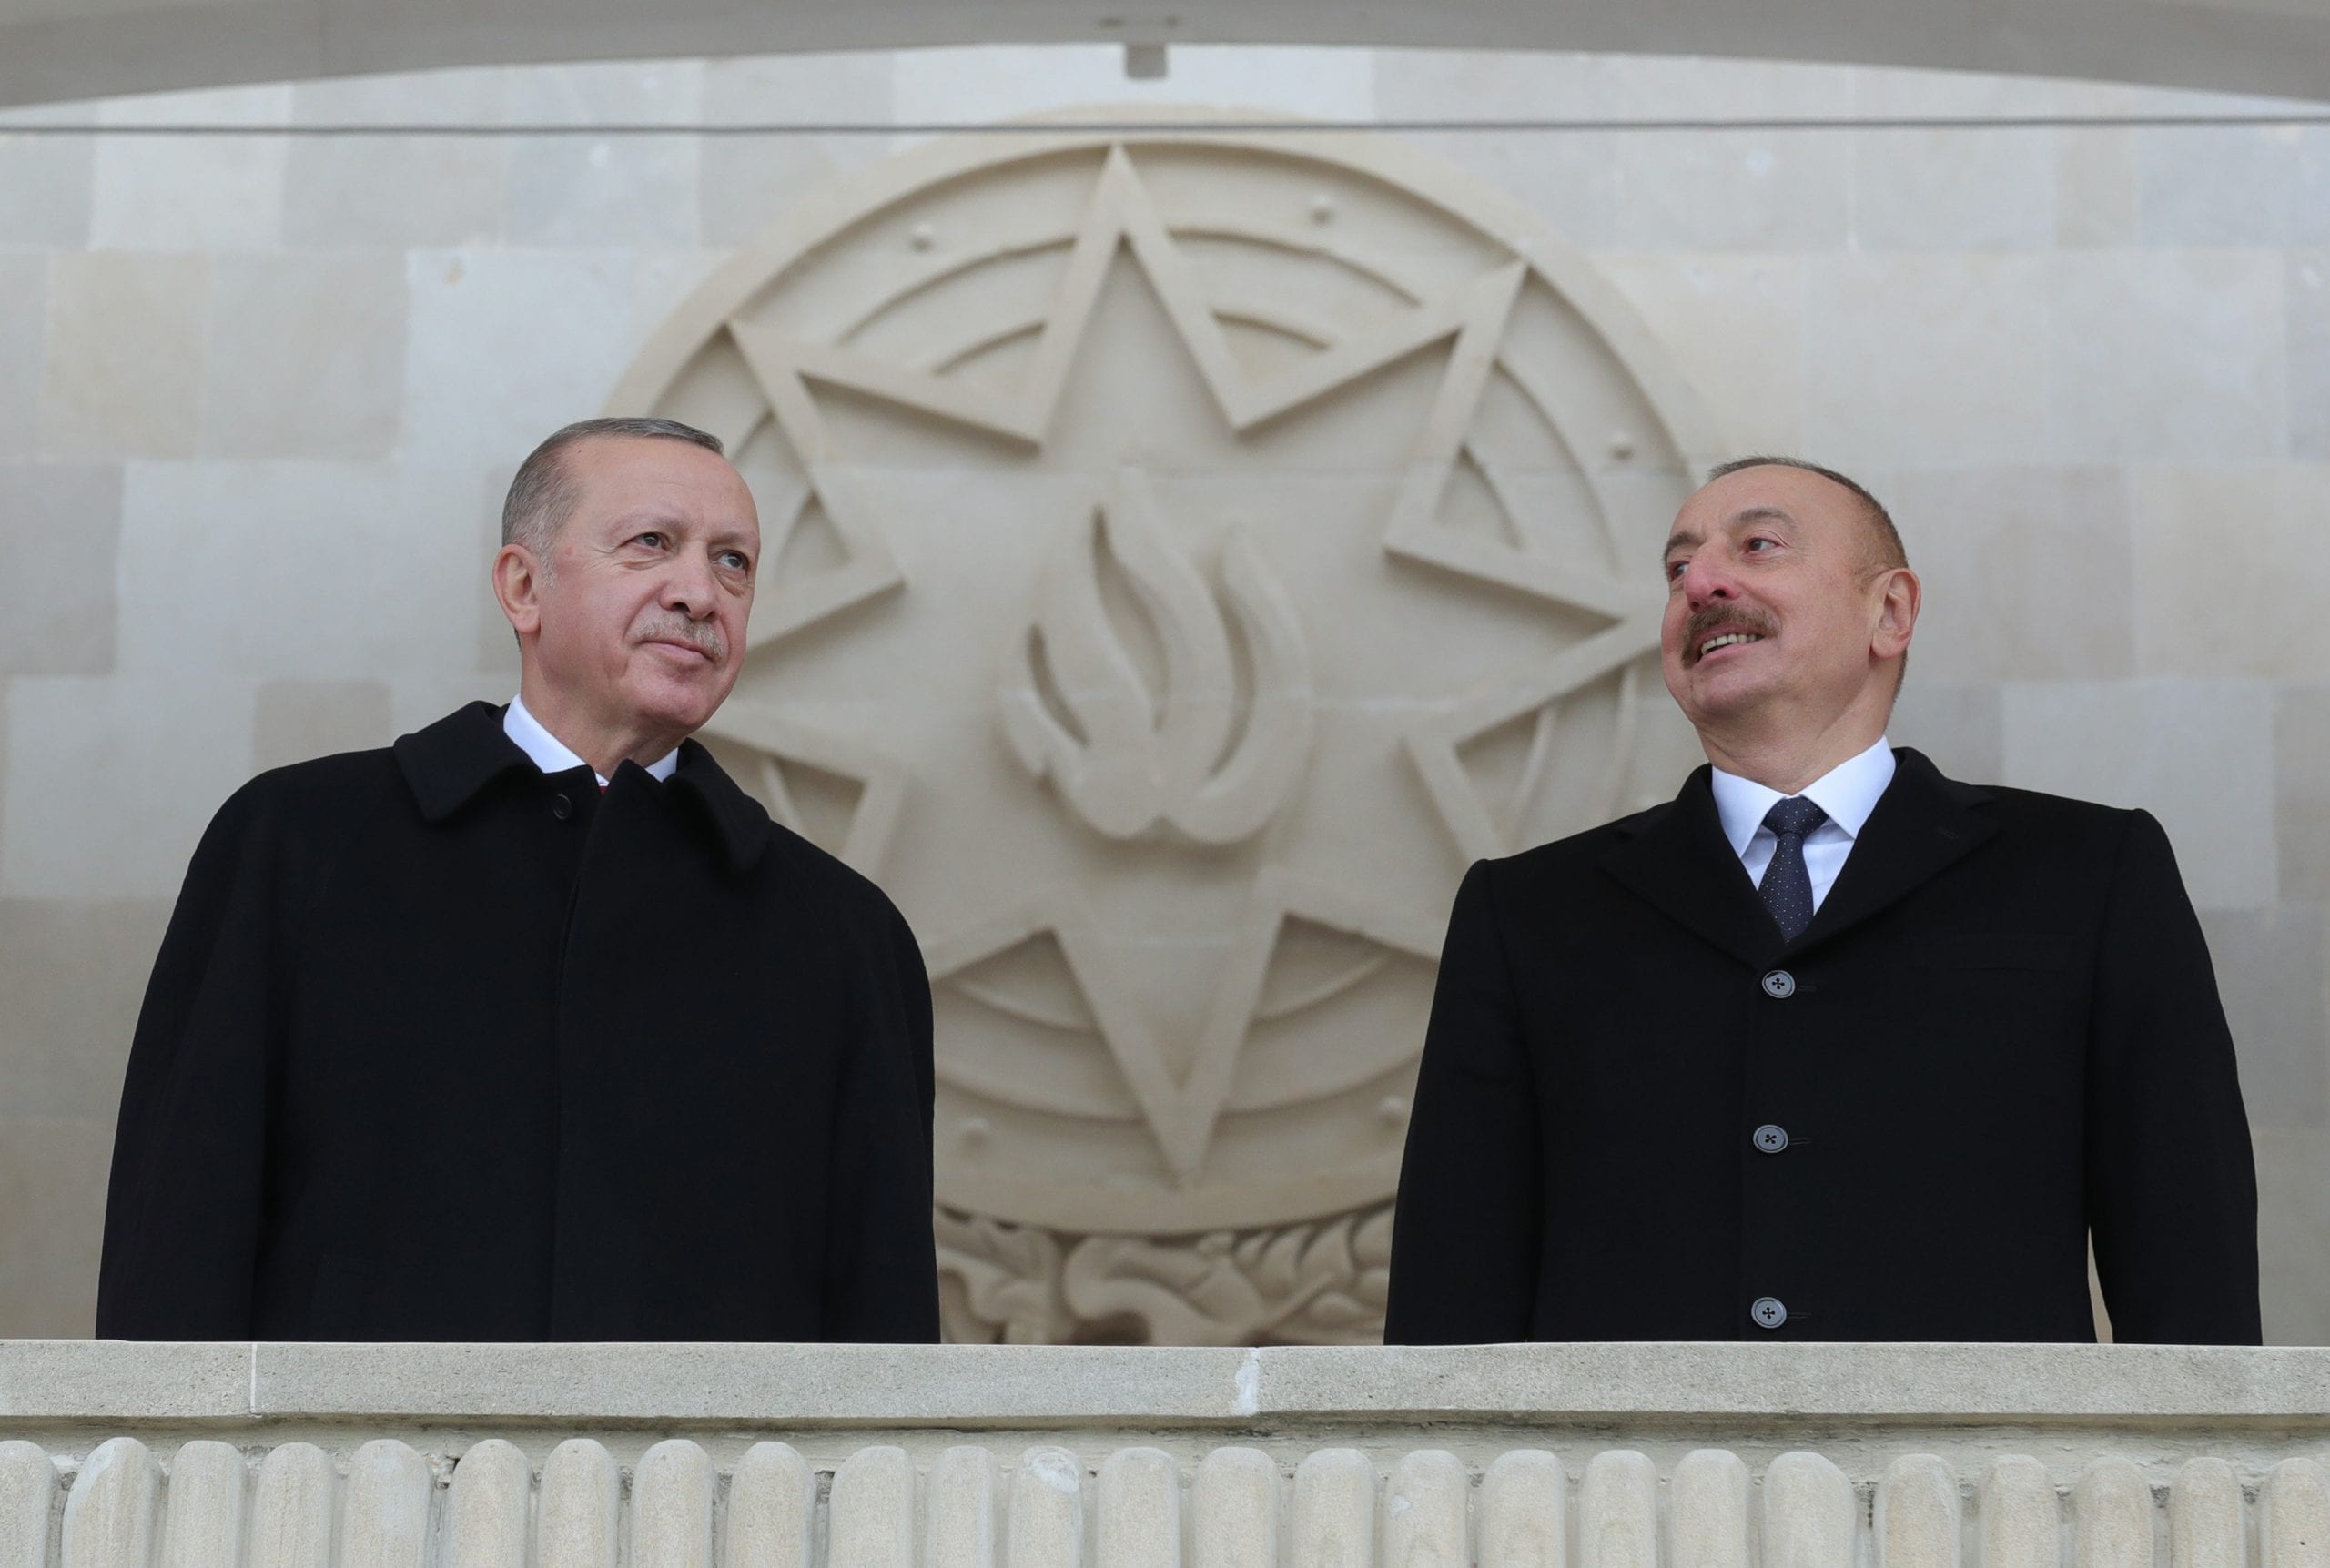 Erdoğan, Aliyev discuss bilateral relations and regional development